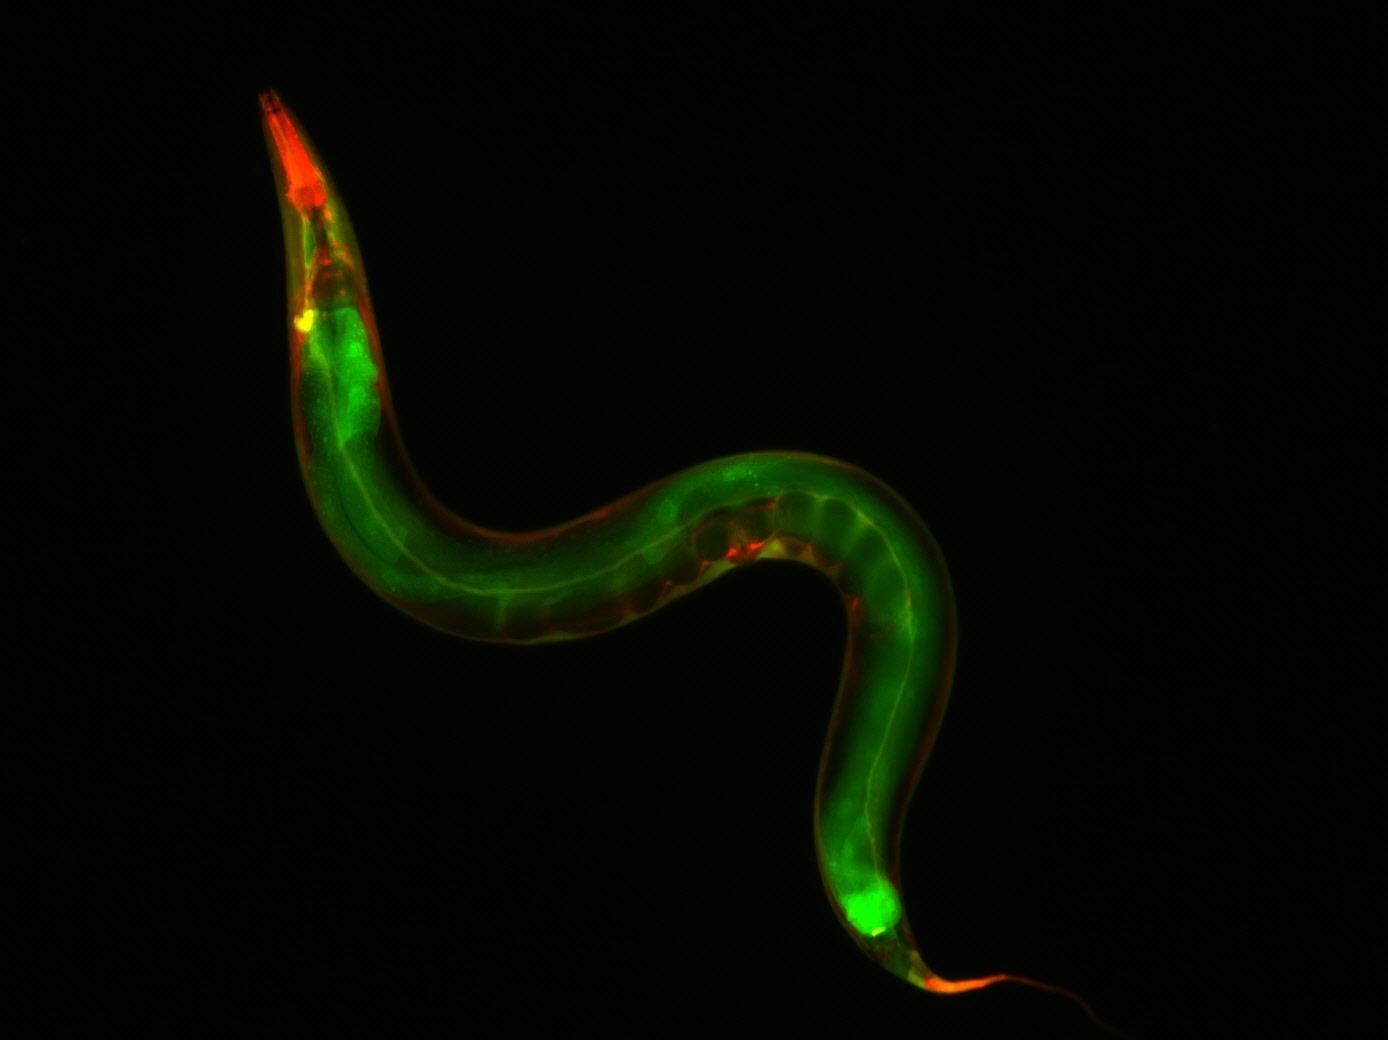 C. elegans, a nematode worm.